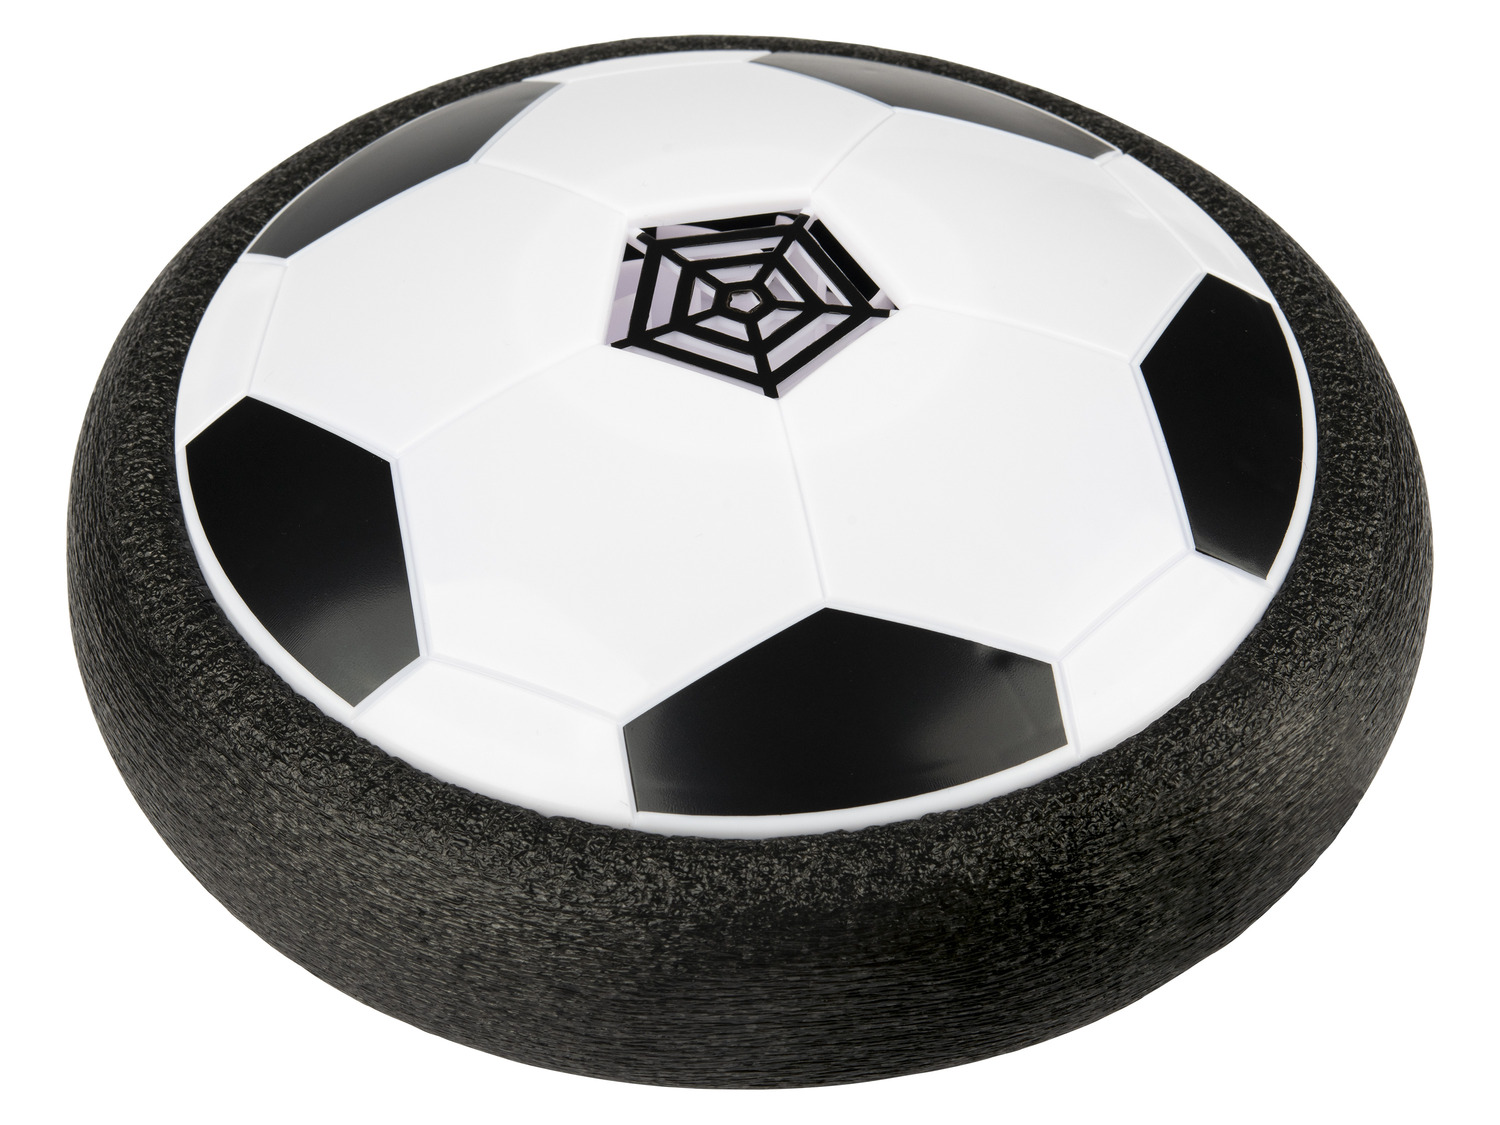 zuschaltbare | Playtive Air-Power-Fußball, LED LIDL